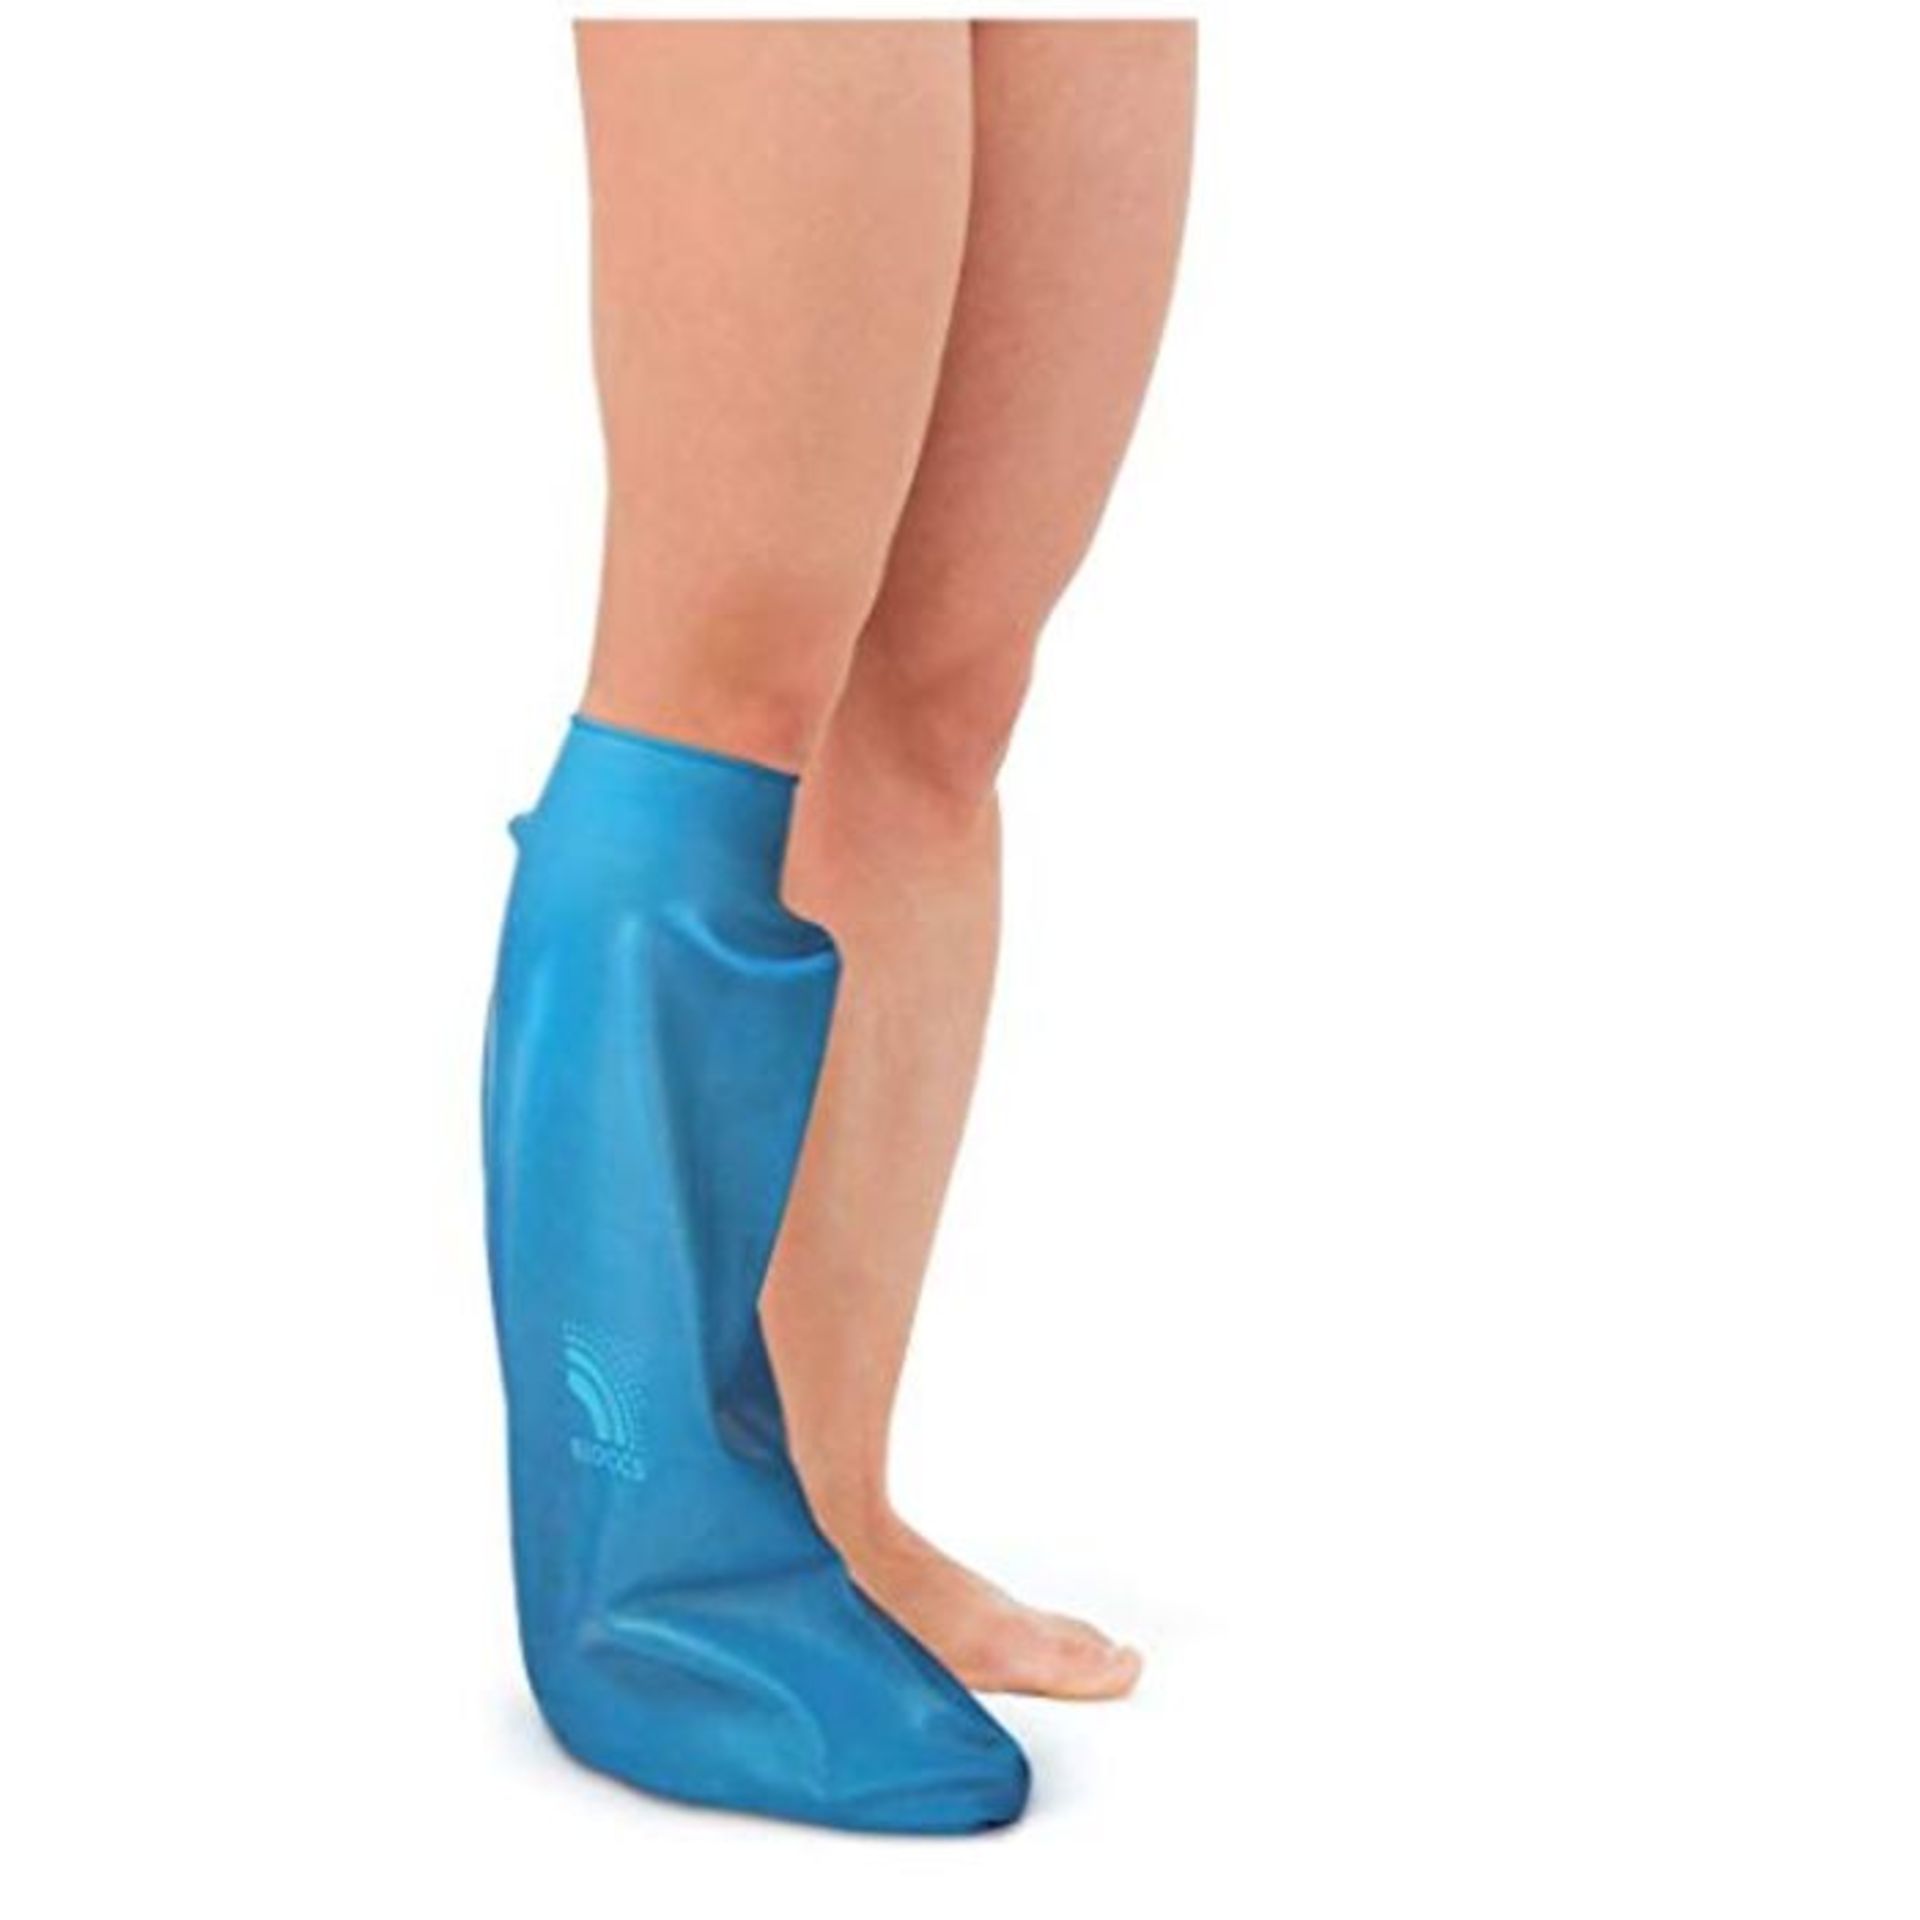 Bloccs Waterproof Cover for Plaster Cast Leg, Swim, Shower & Bathe. Watertight Protect